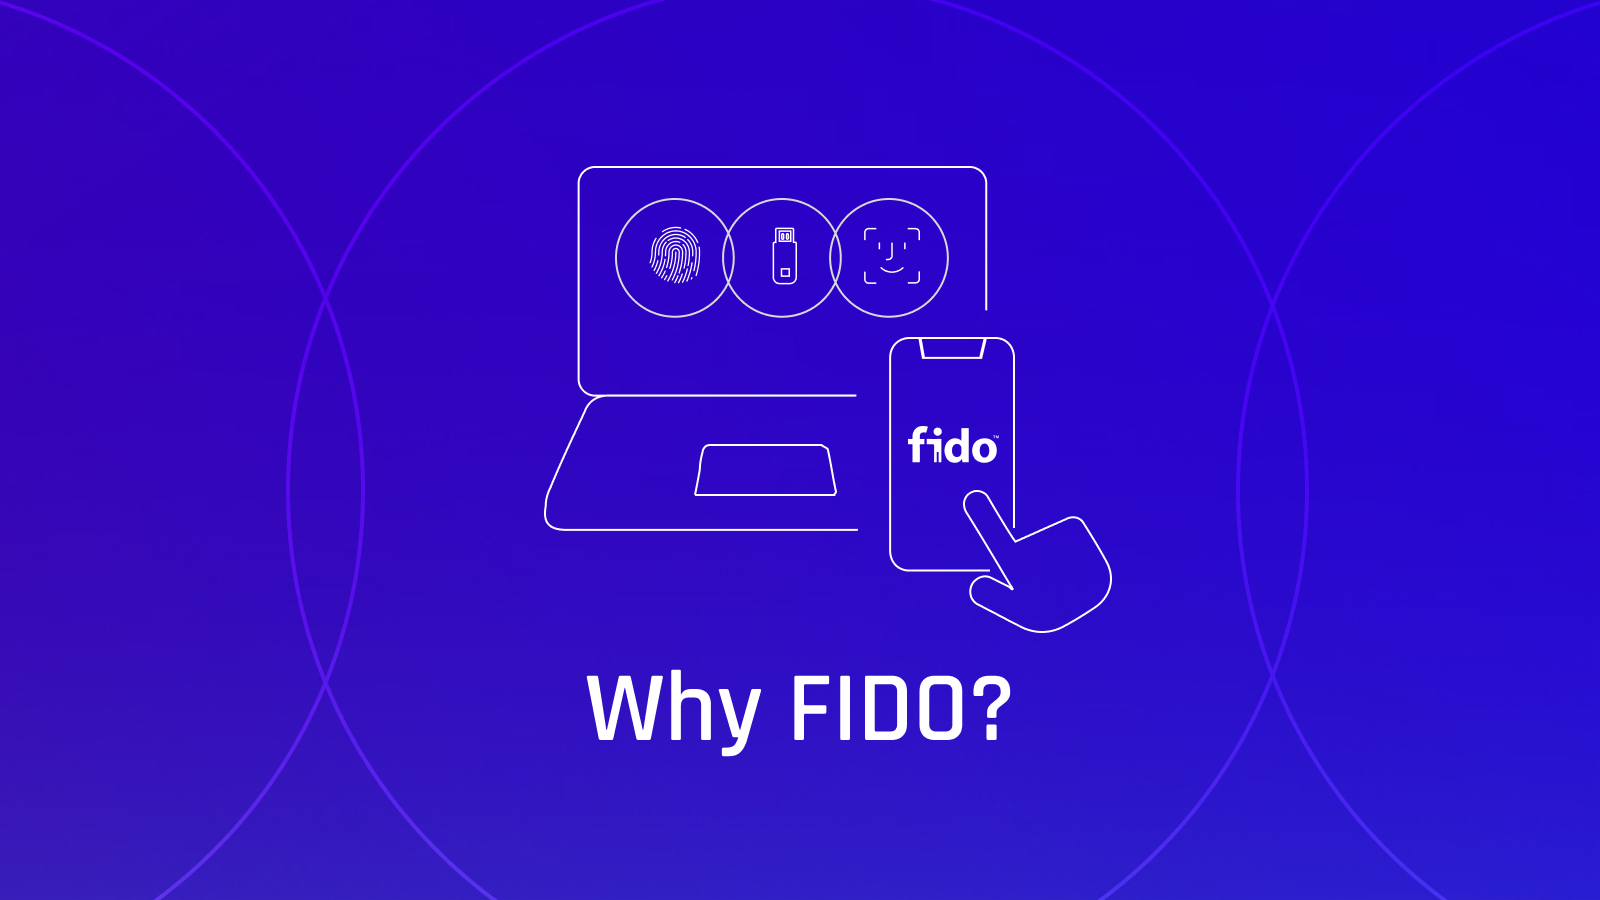 Desktop Authenticator UX Guidelines - FIDO Alliance